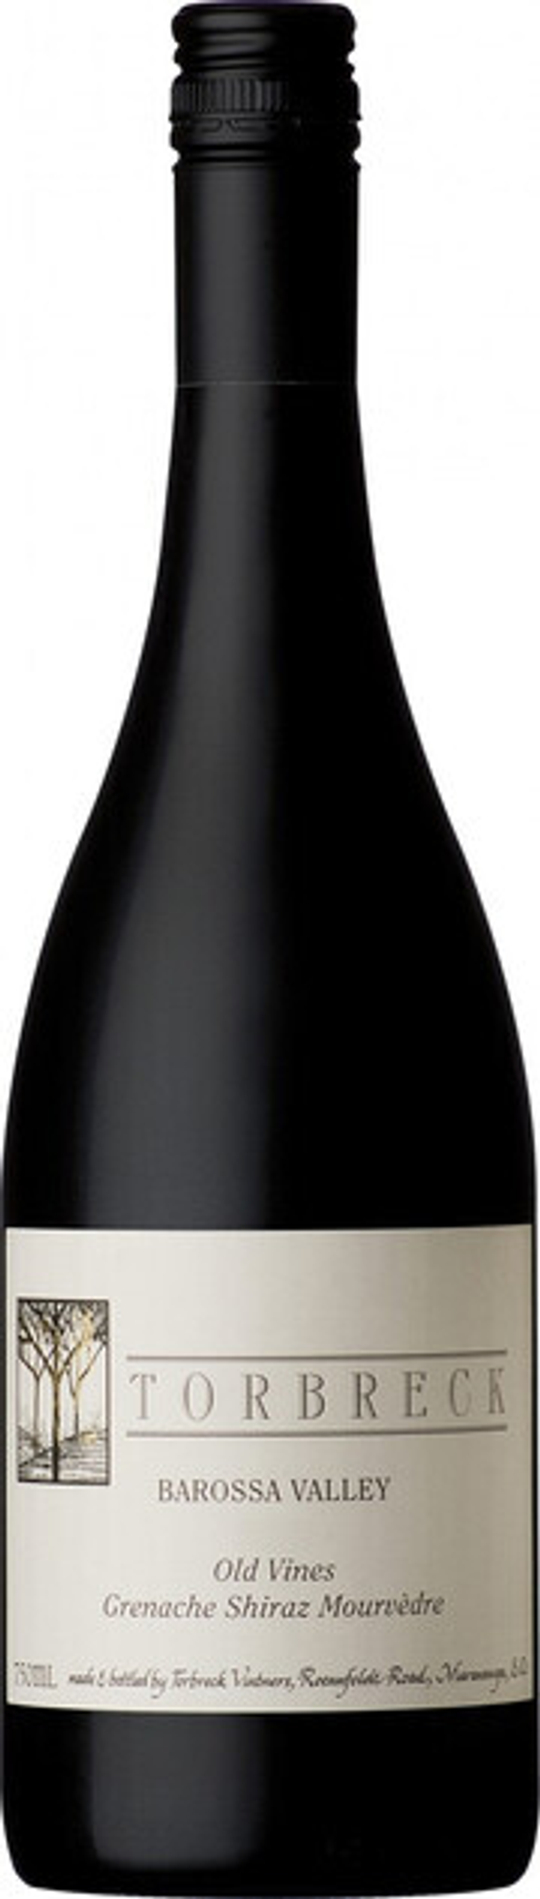 Вино Torbreck Old Vines Grenache Shiraz Mourvedre Barossa Valley, 0,75 л.